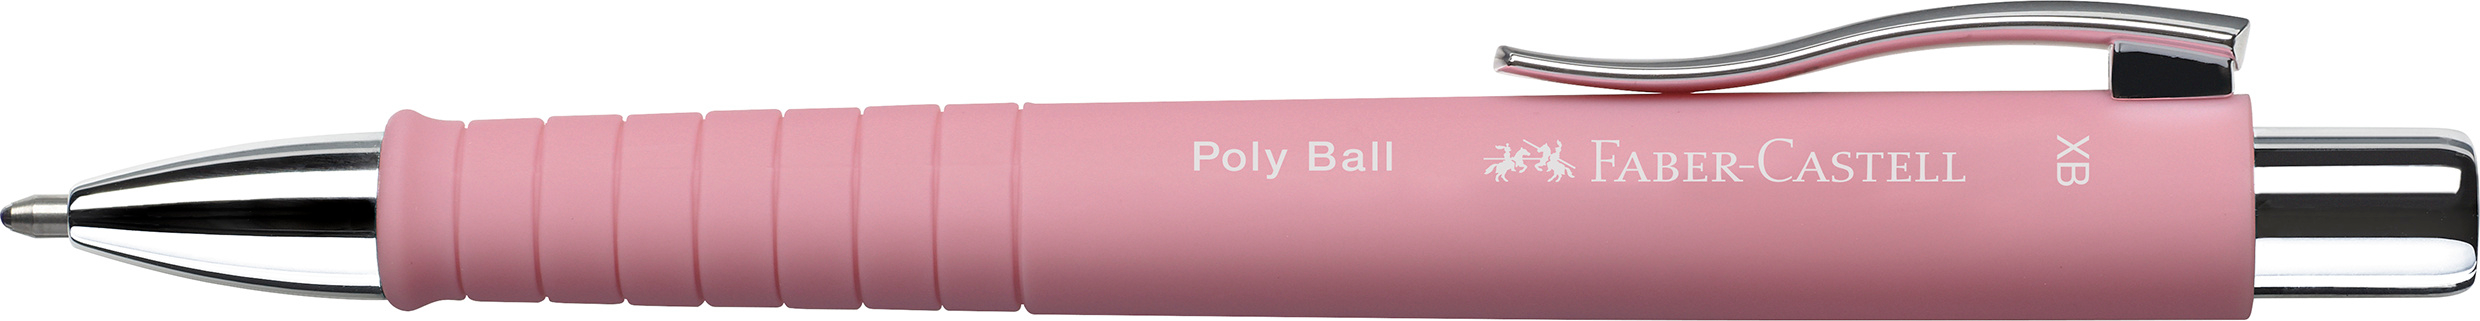 FABER-CASTELL Stylo à bille Poly Ball XB 241127 rosé